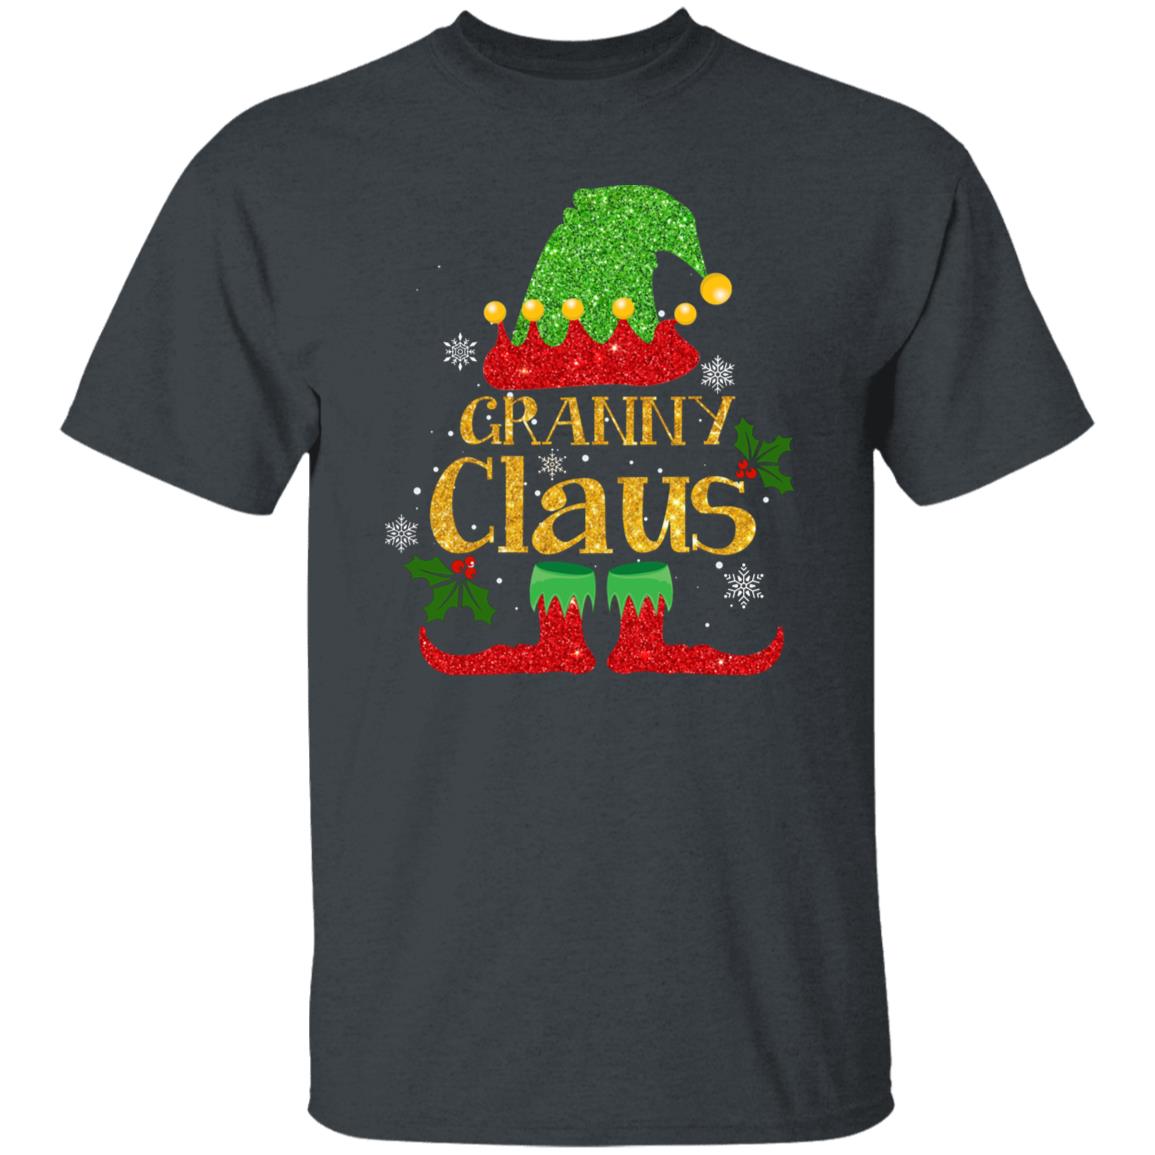 Granny Claus Christmas Unisex Shirt Grandmother Holiday tee Black Dark Heather-Family-Gift-Planet